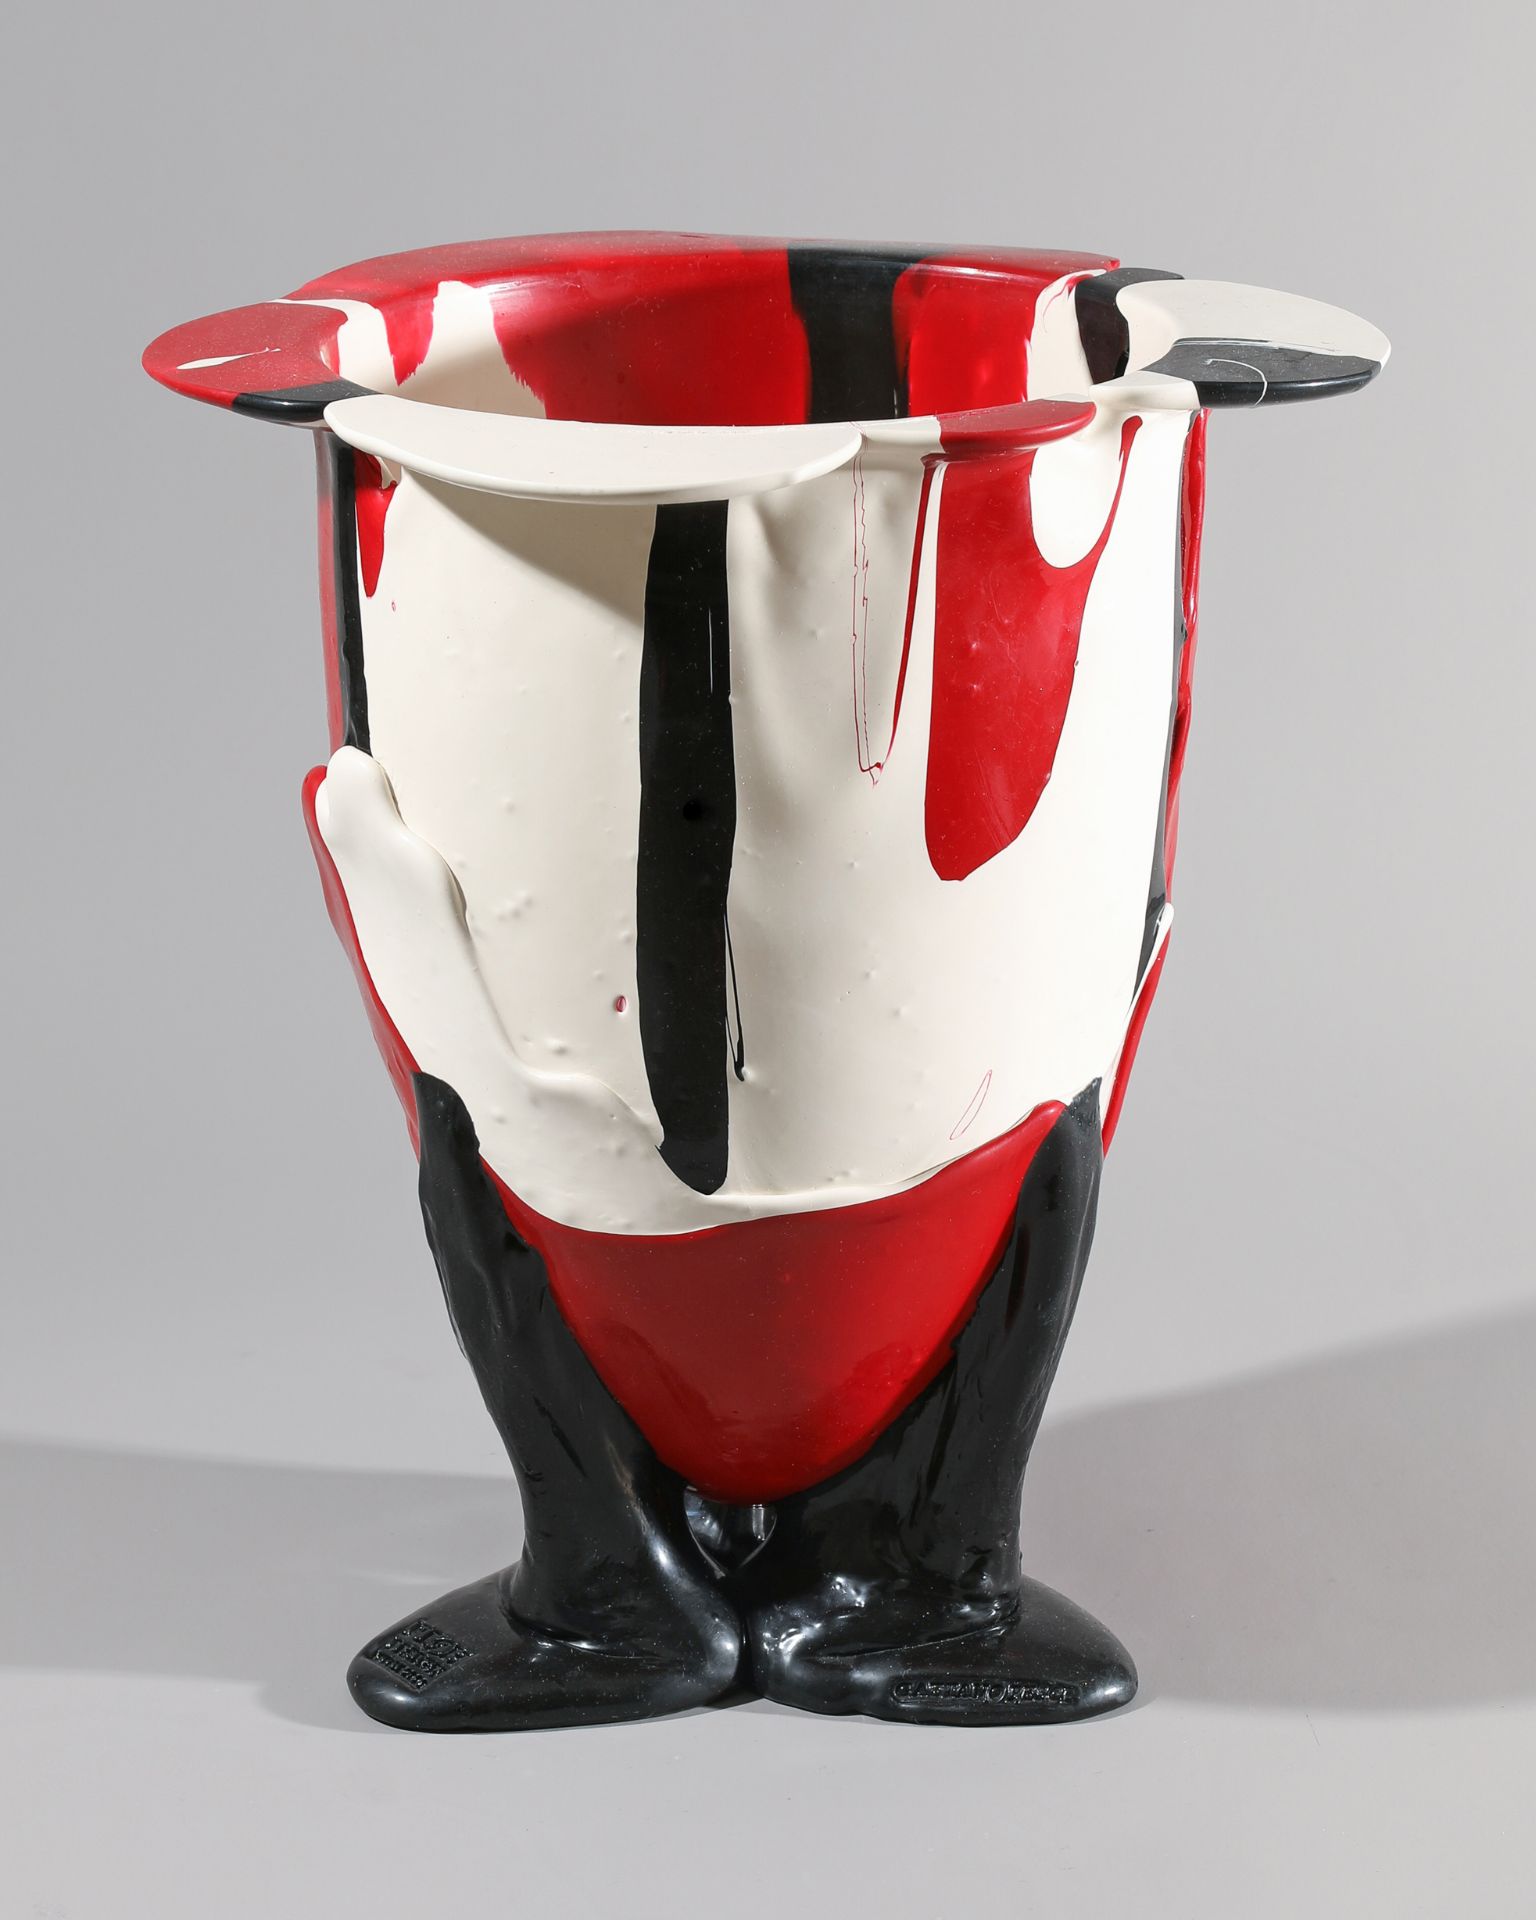 Gaetano Pesce, Fish Design, große Vase Modell Amazonia